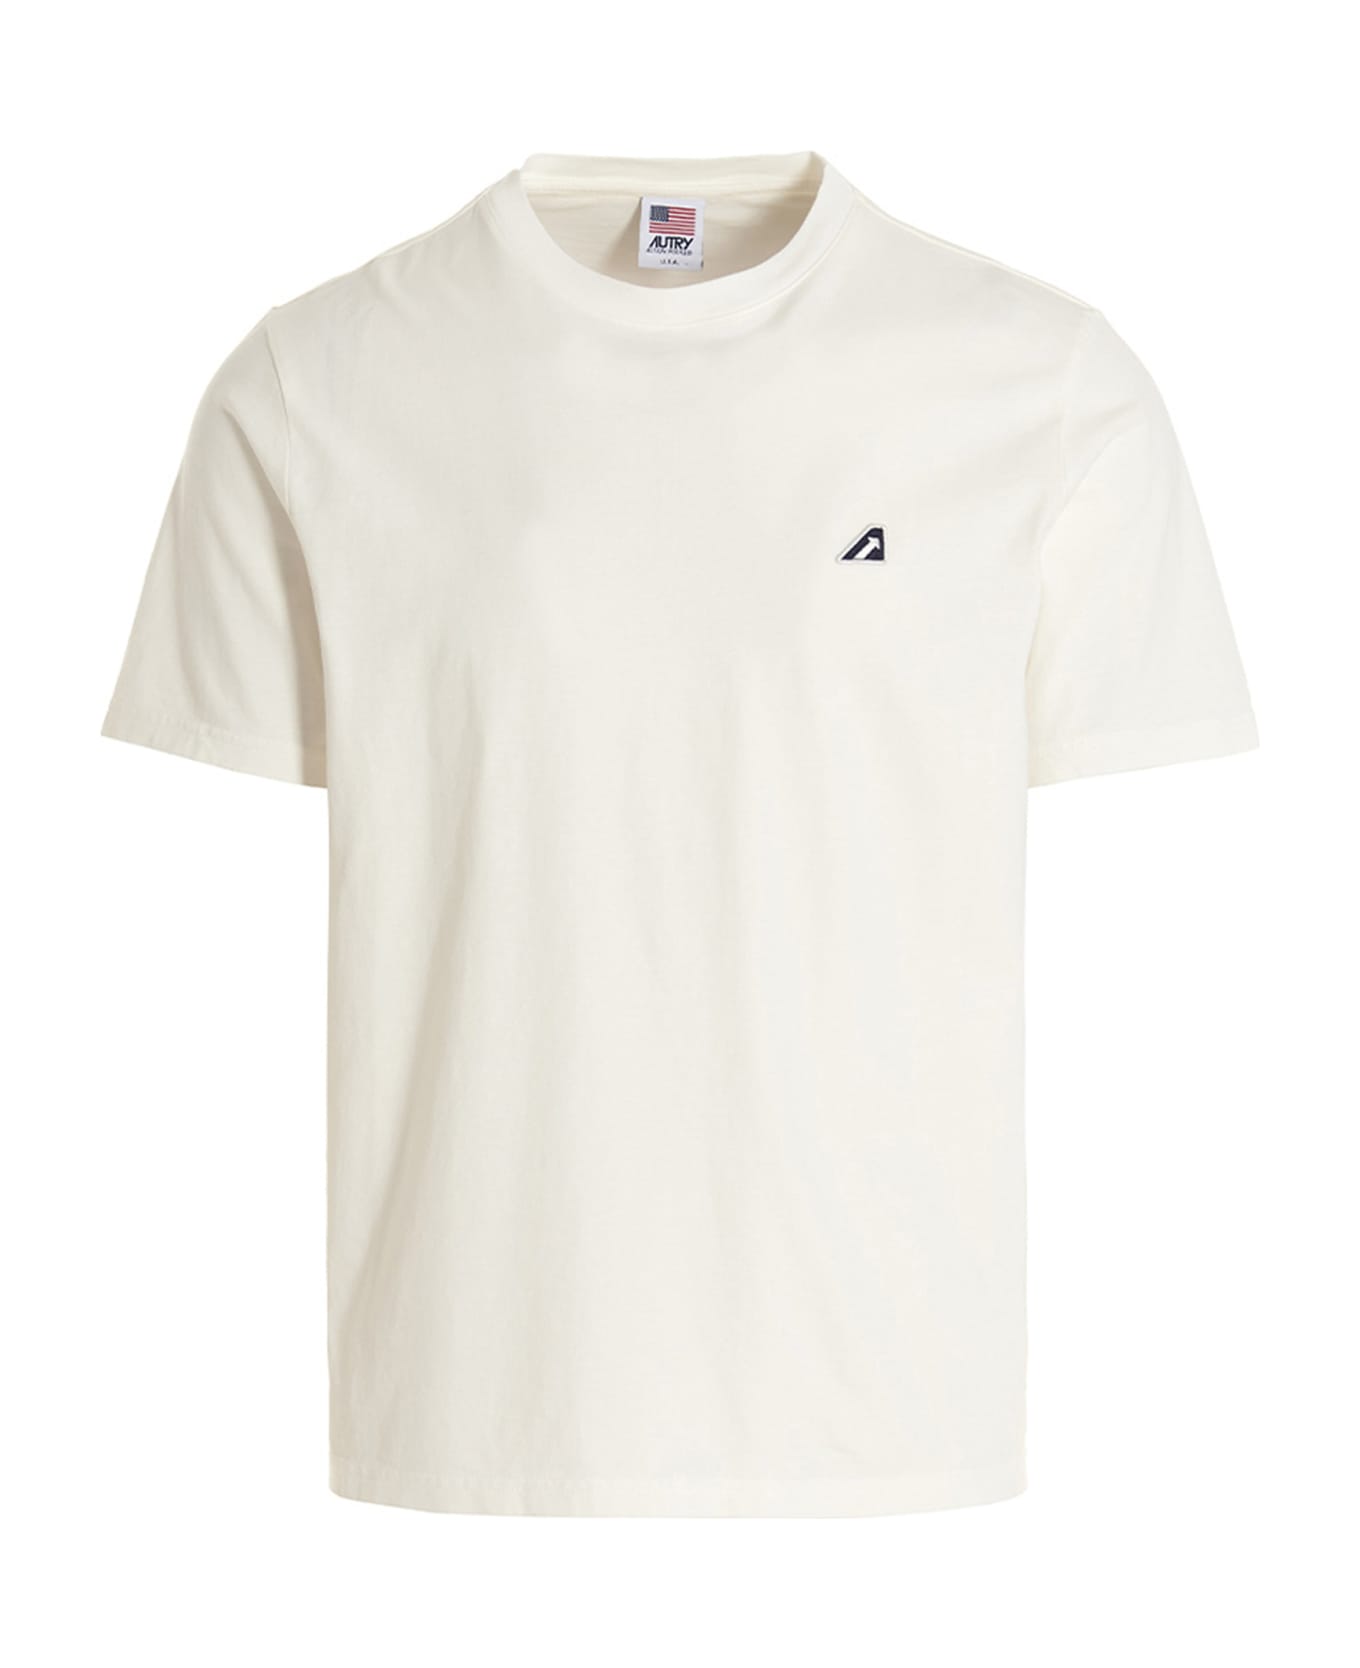 Autry T-shirt In White Cotton - WHITE